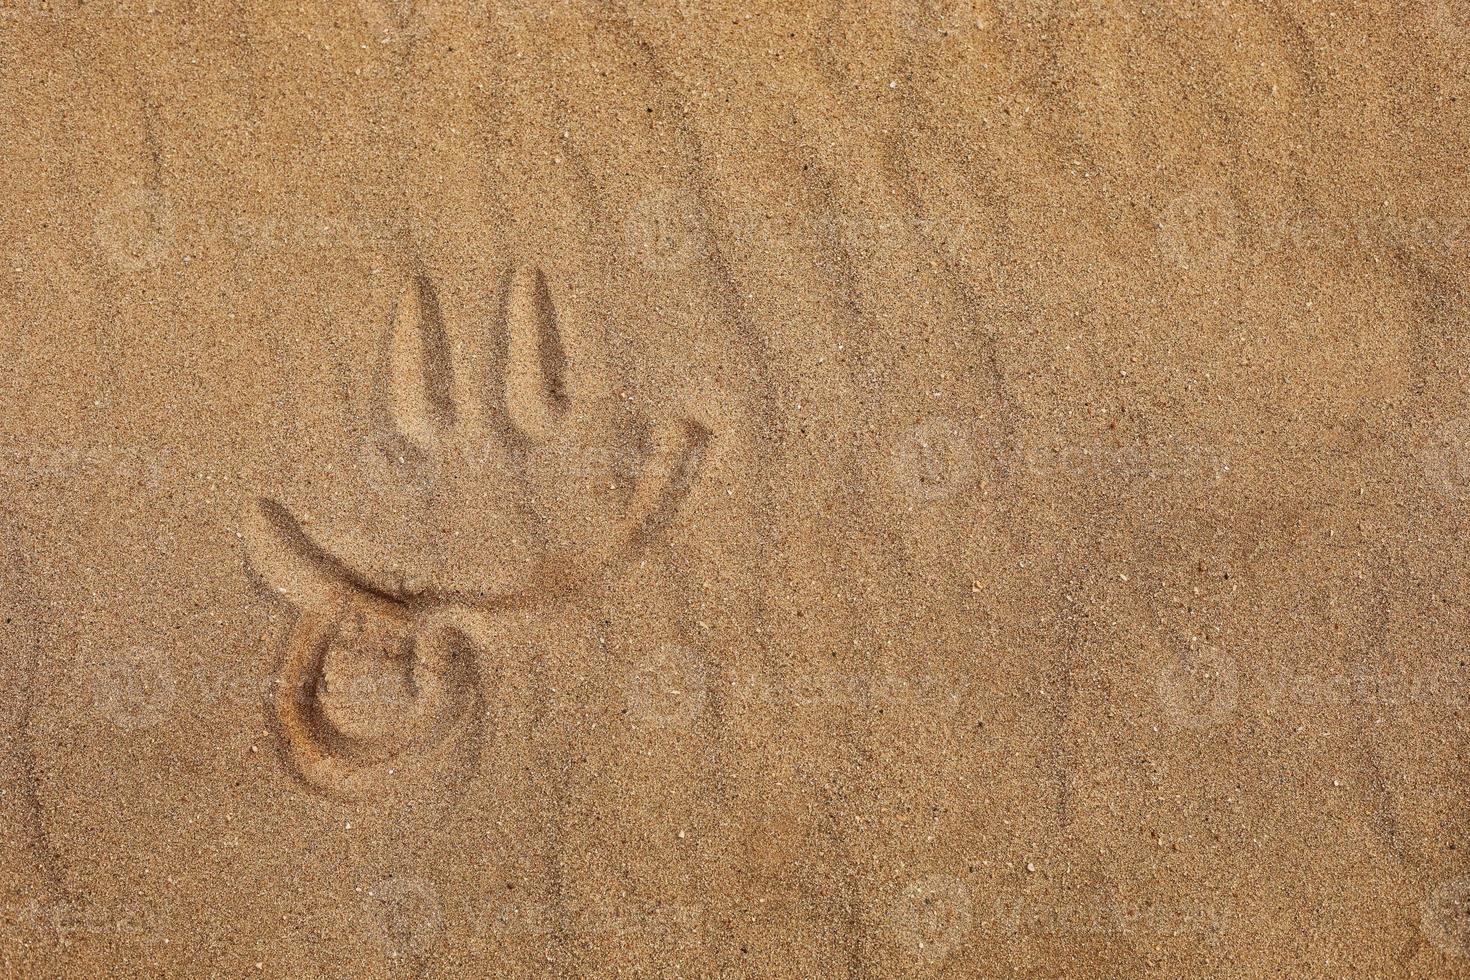 smiley ansikte med tungan ut med fingret på en sandstrand foto